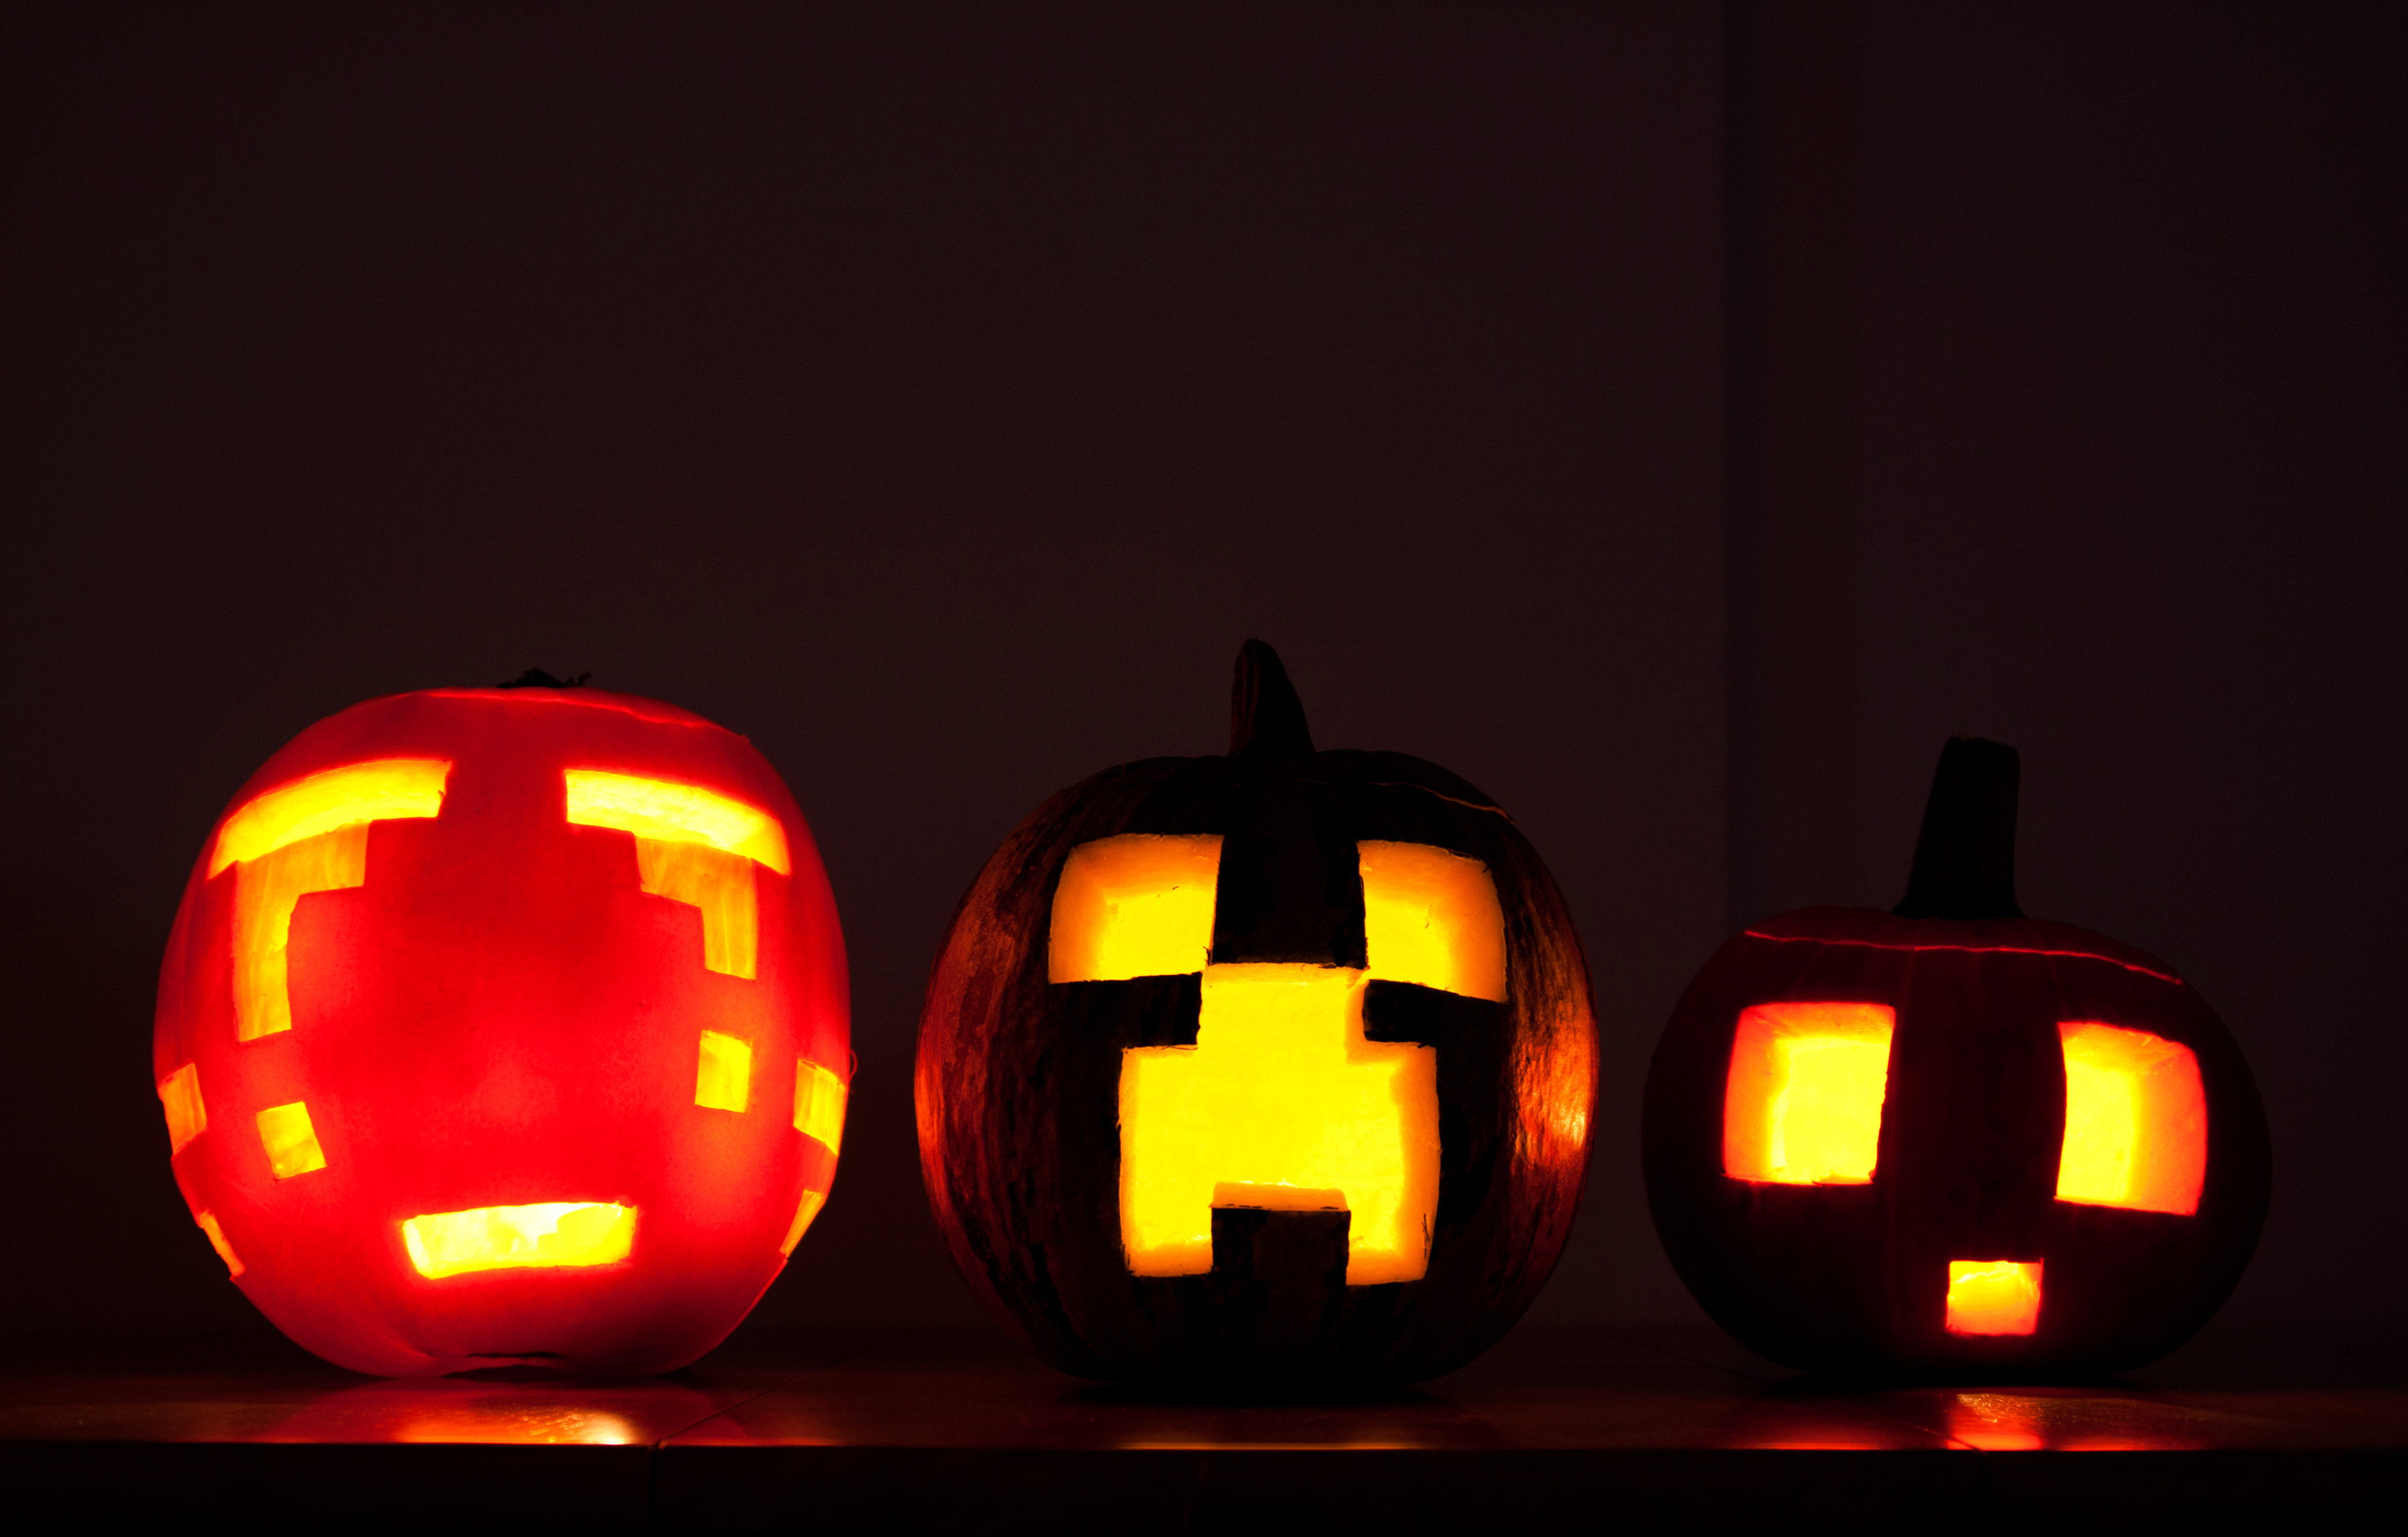 Minecraft Halloween